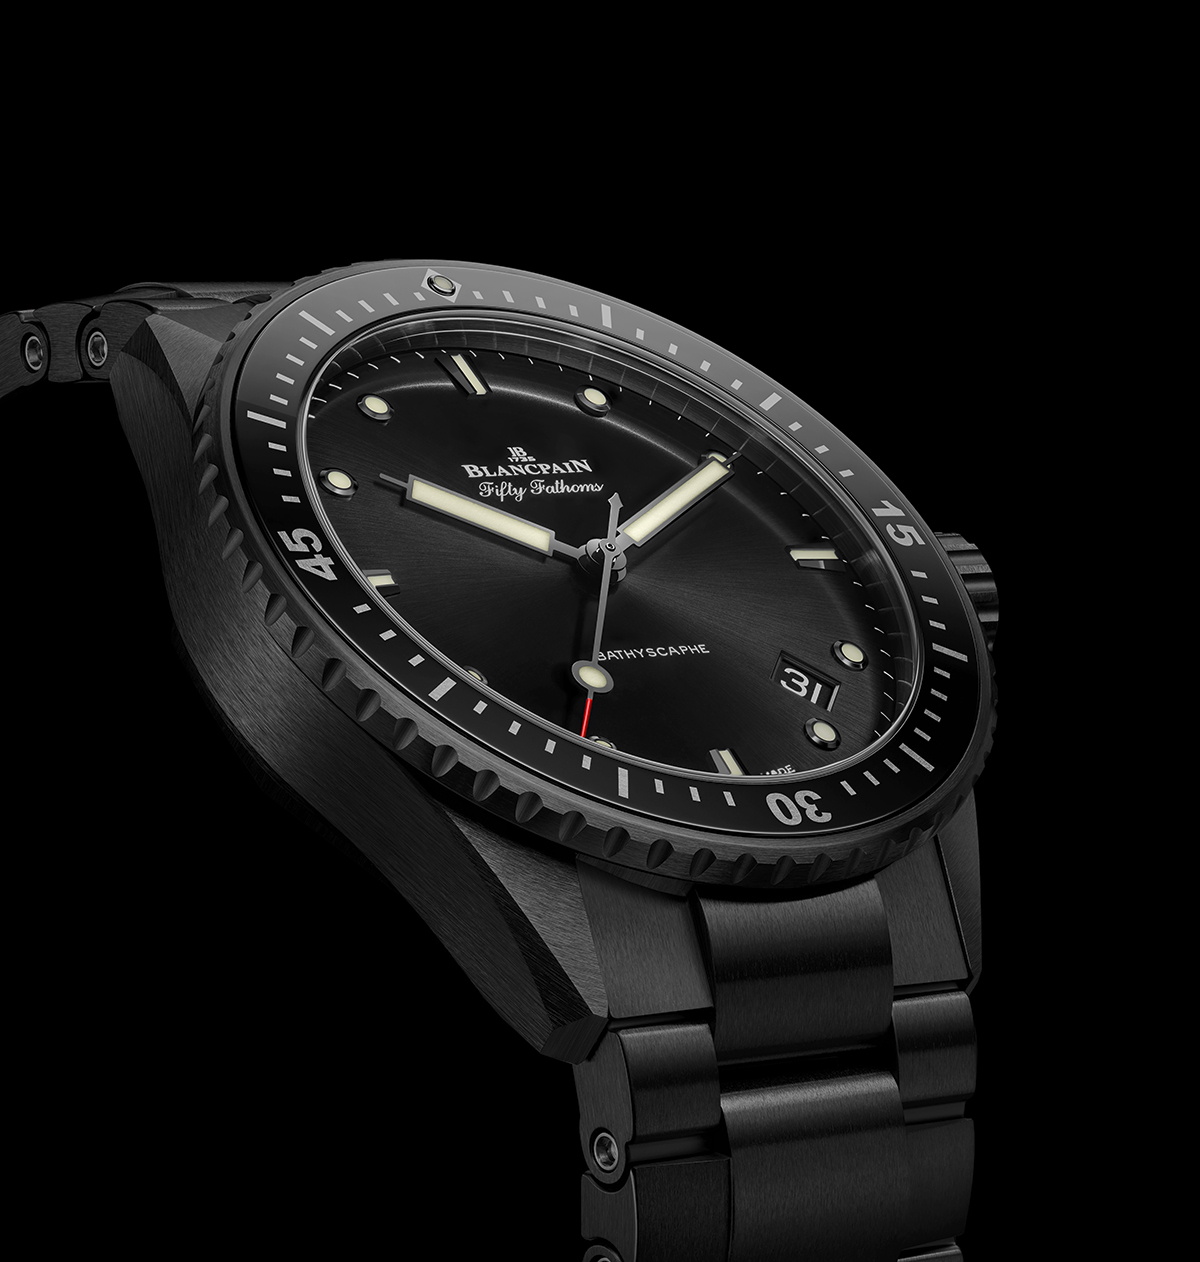 Cortina-Watch-Blancpain-Bathyscaphe-Quantieme-Complet-Phases-de-Lune-black-dial